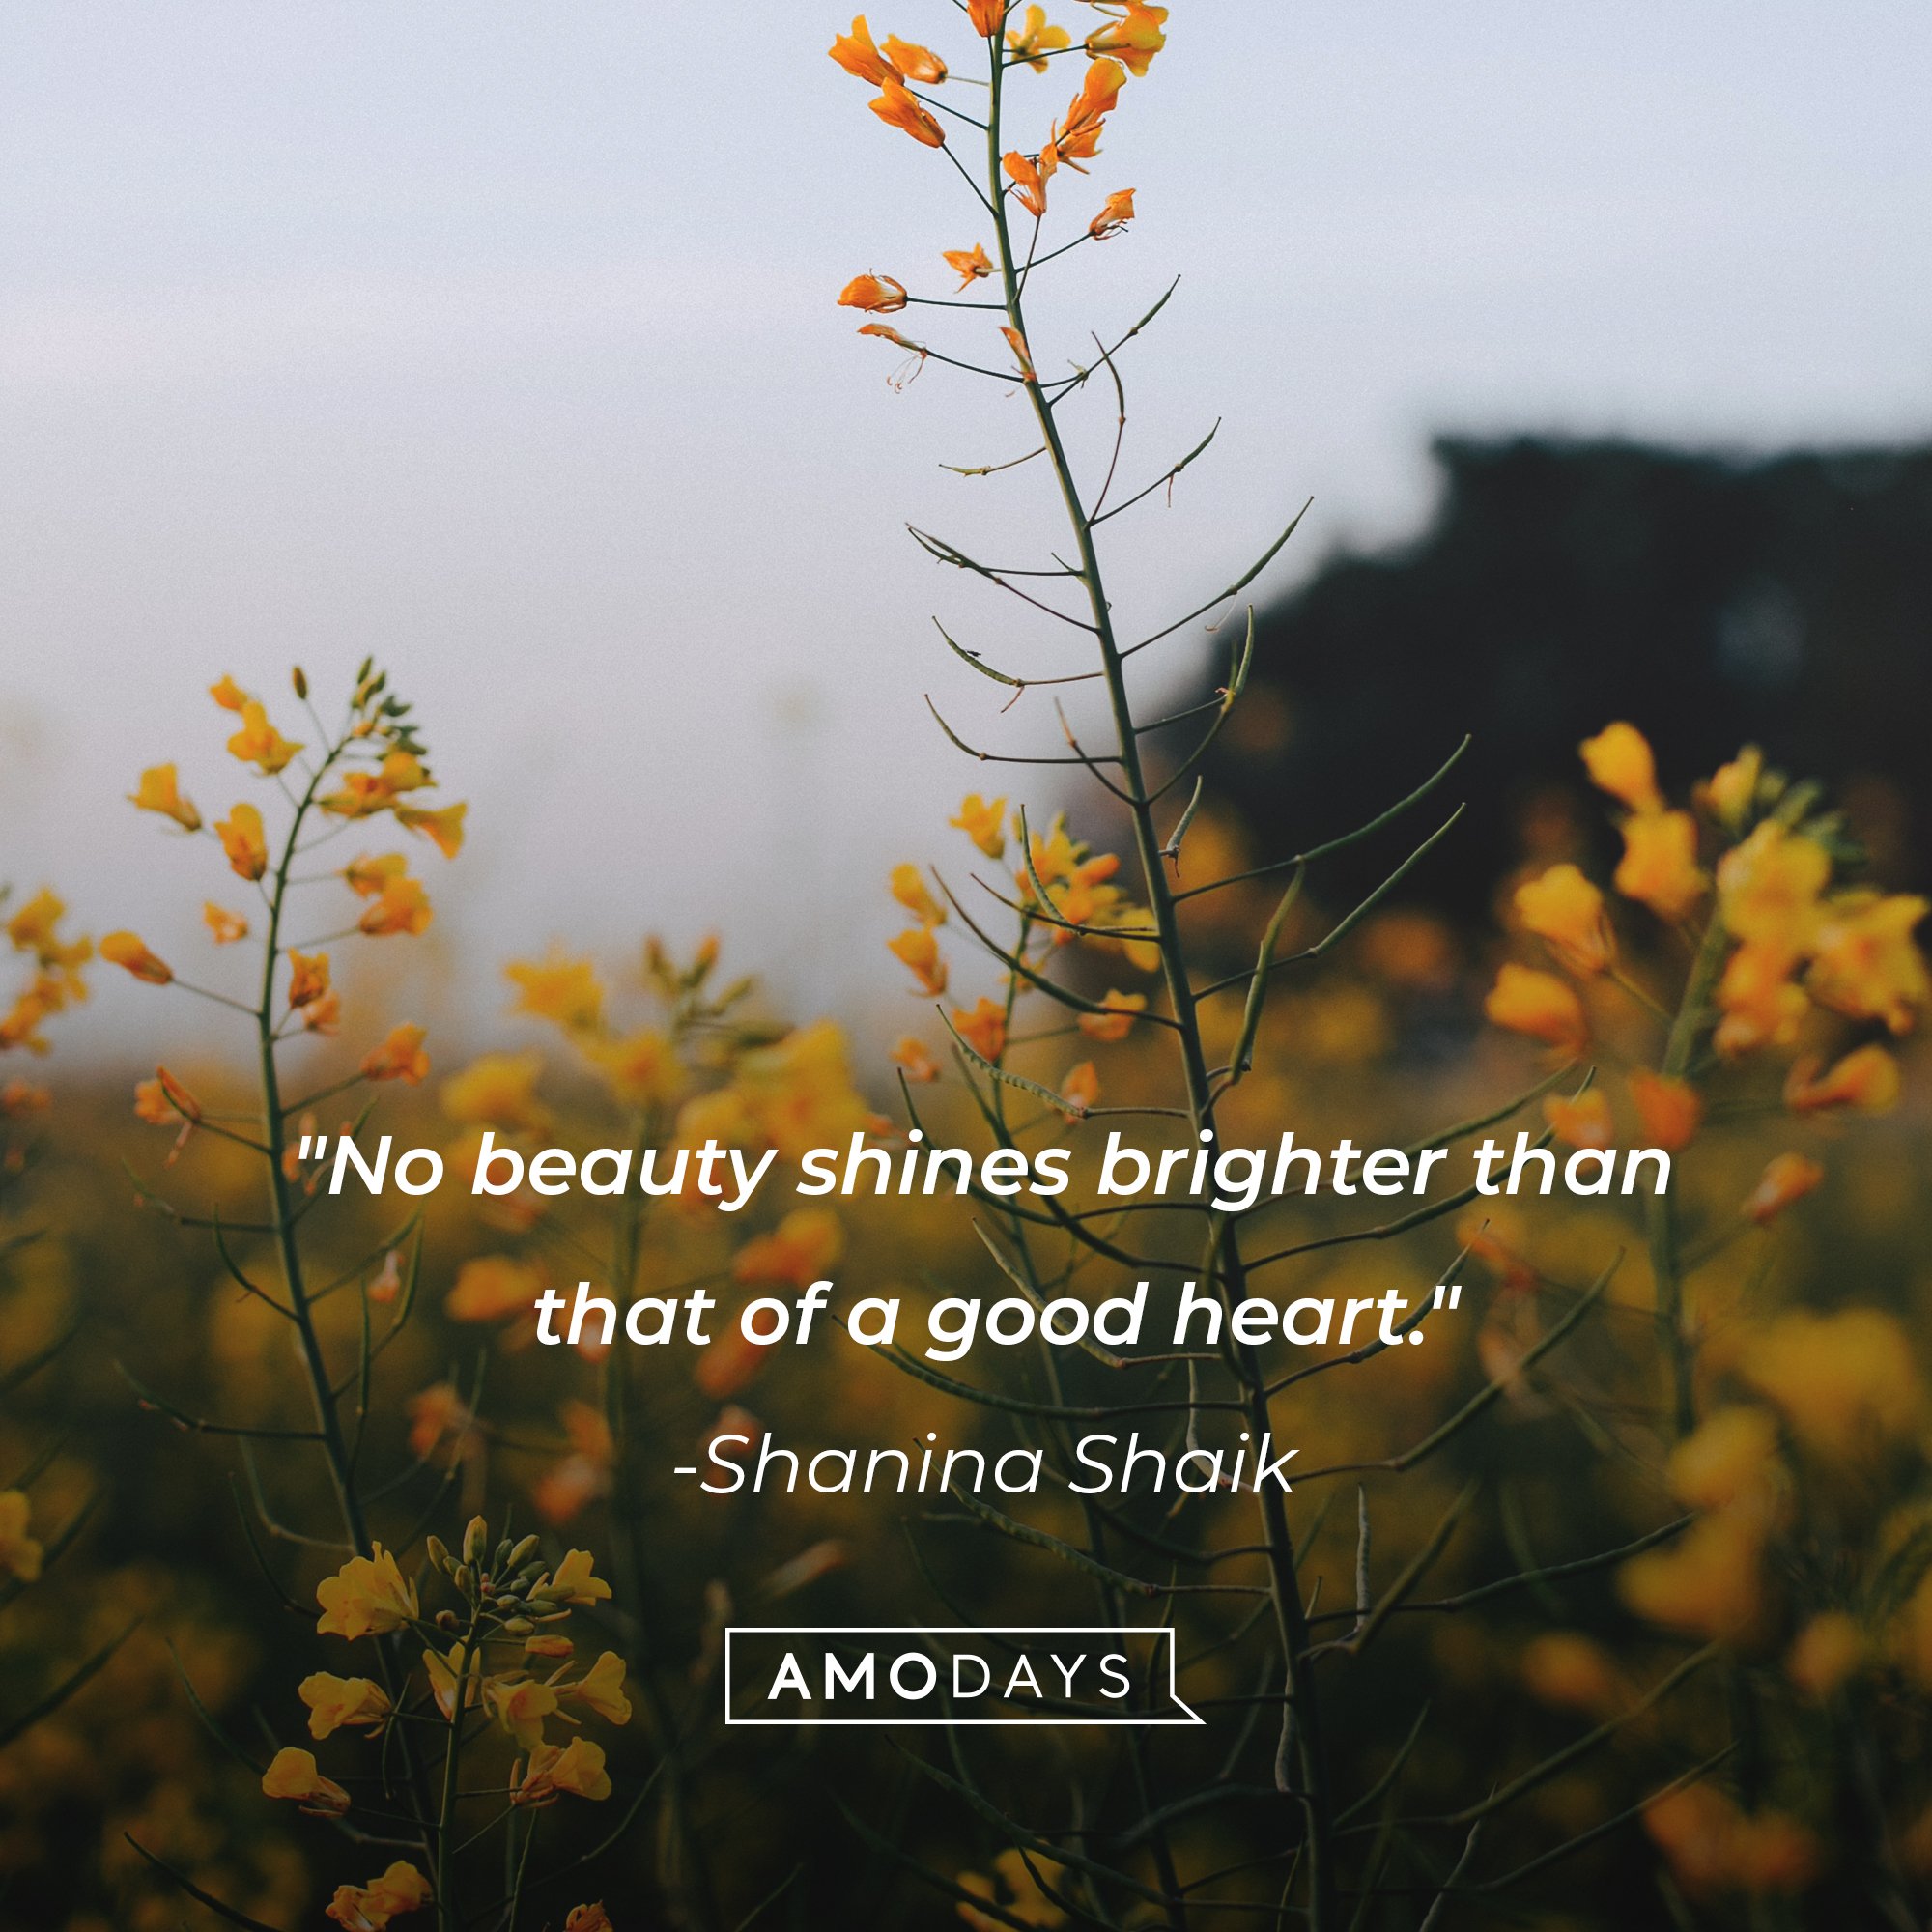 Shanina Shaik’s quote: "No beauty shines brighter than that of a good heart." | Image: AmoDays